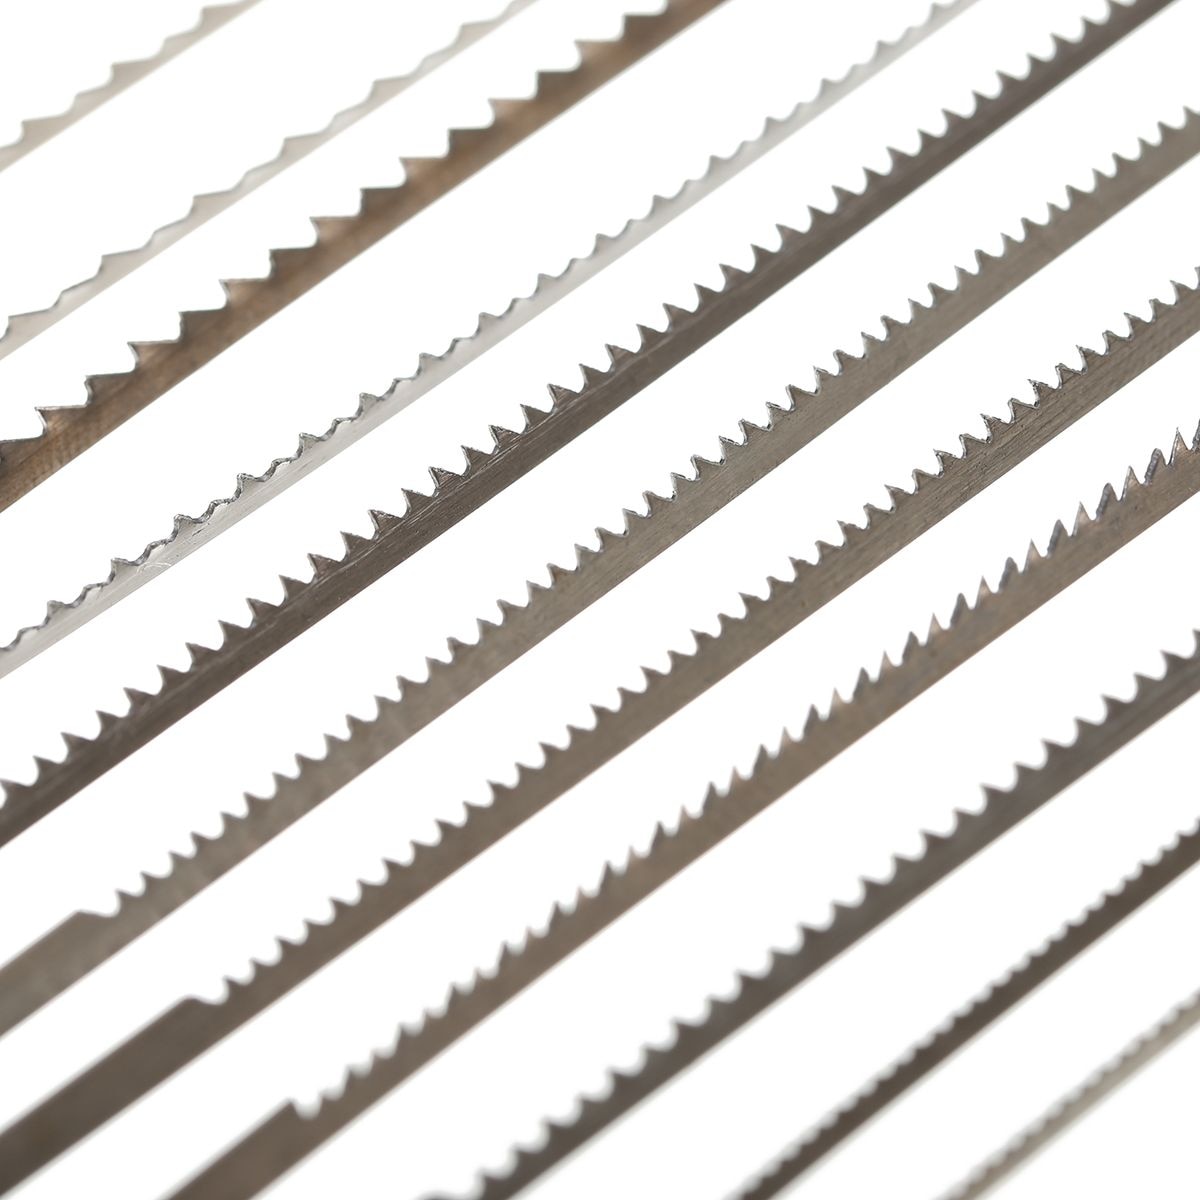 DWZ 12x Pinned Scroll Saw Blades Woodworking Power Tools Accessories 127mm Black